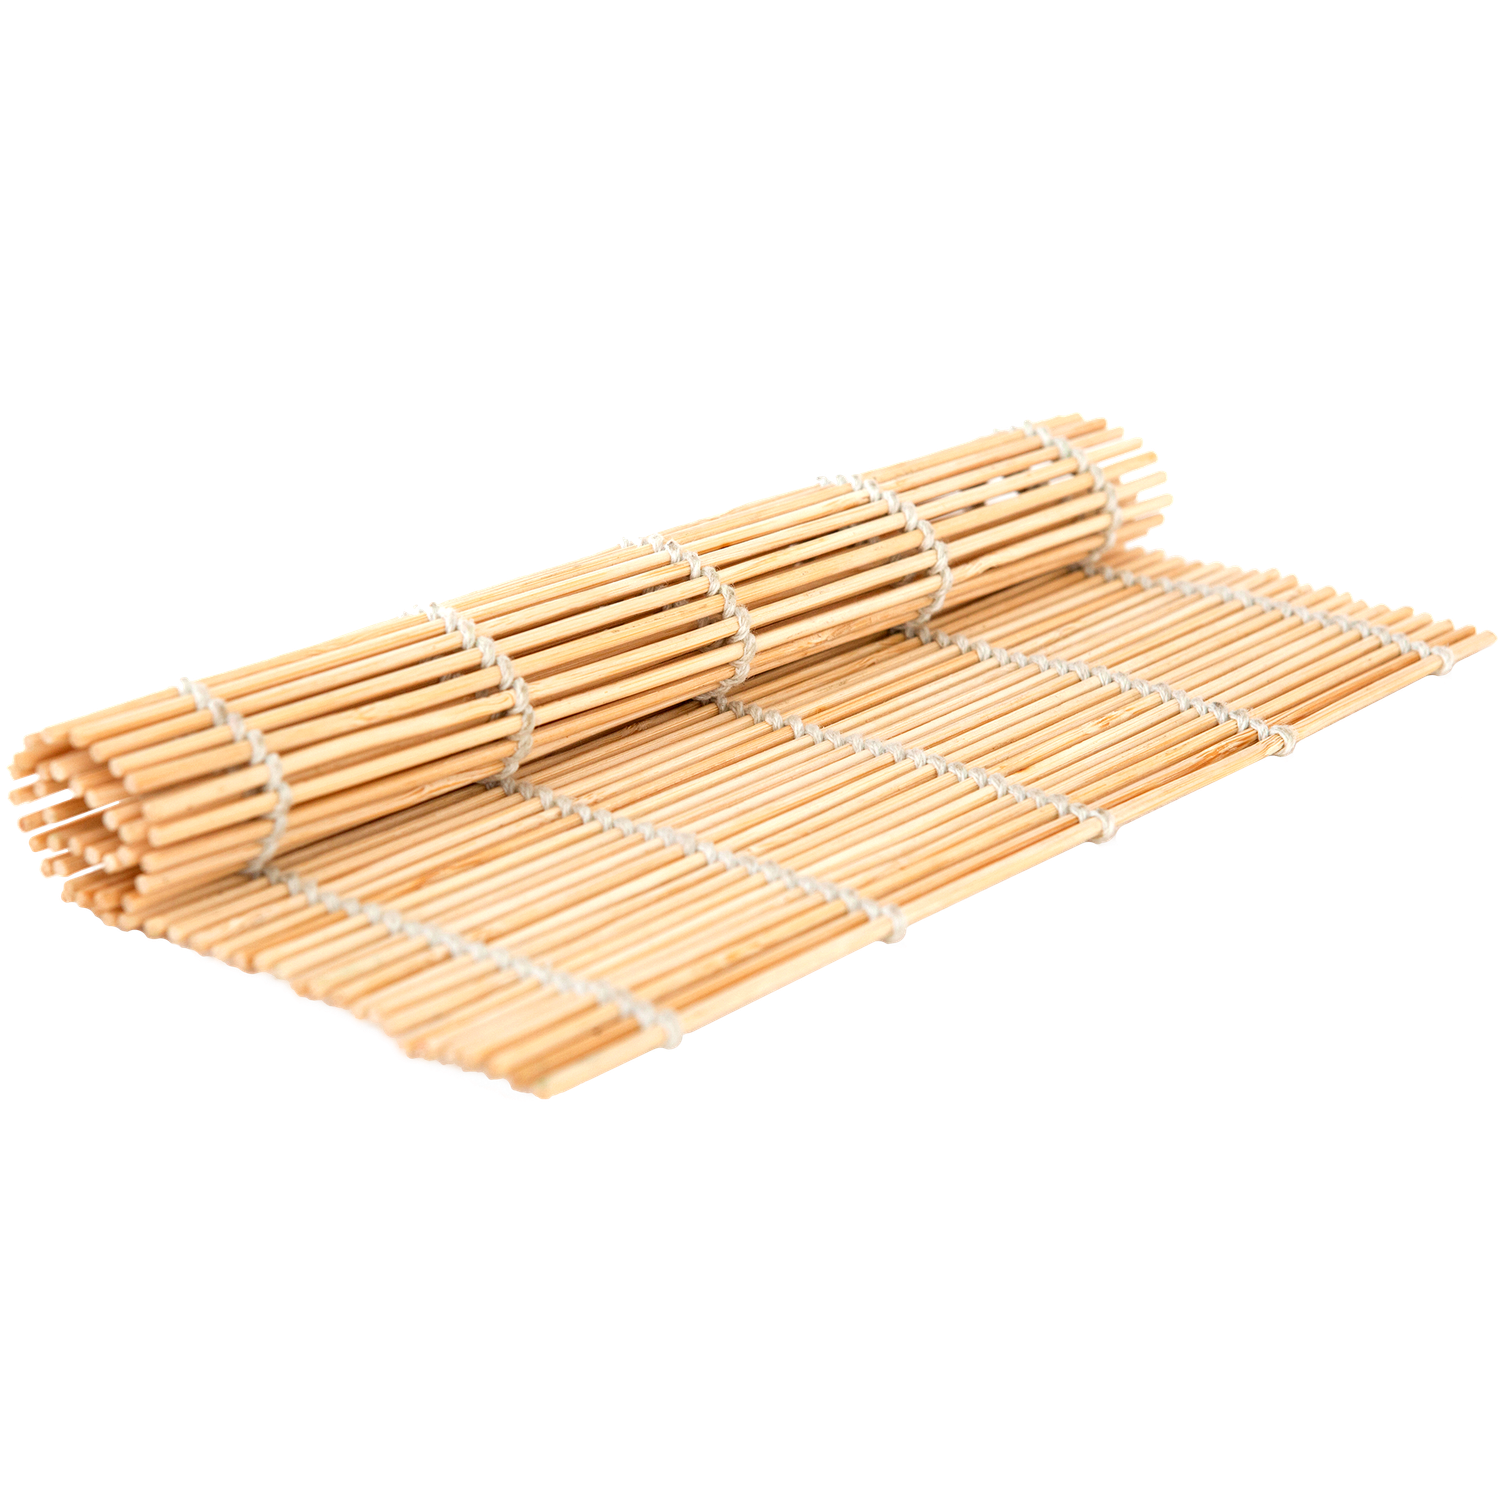 Коврик для суши и роллов LolUno Home циновка бамбуковая - фото 2